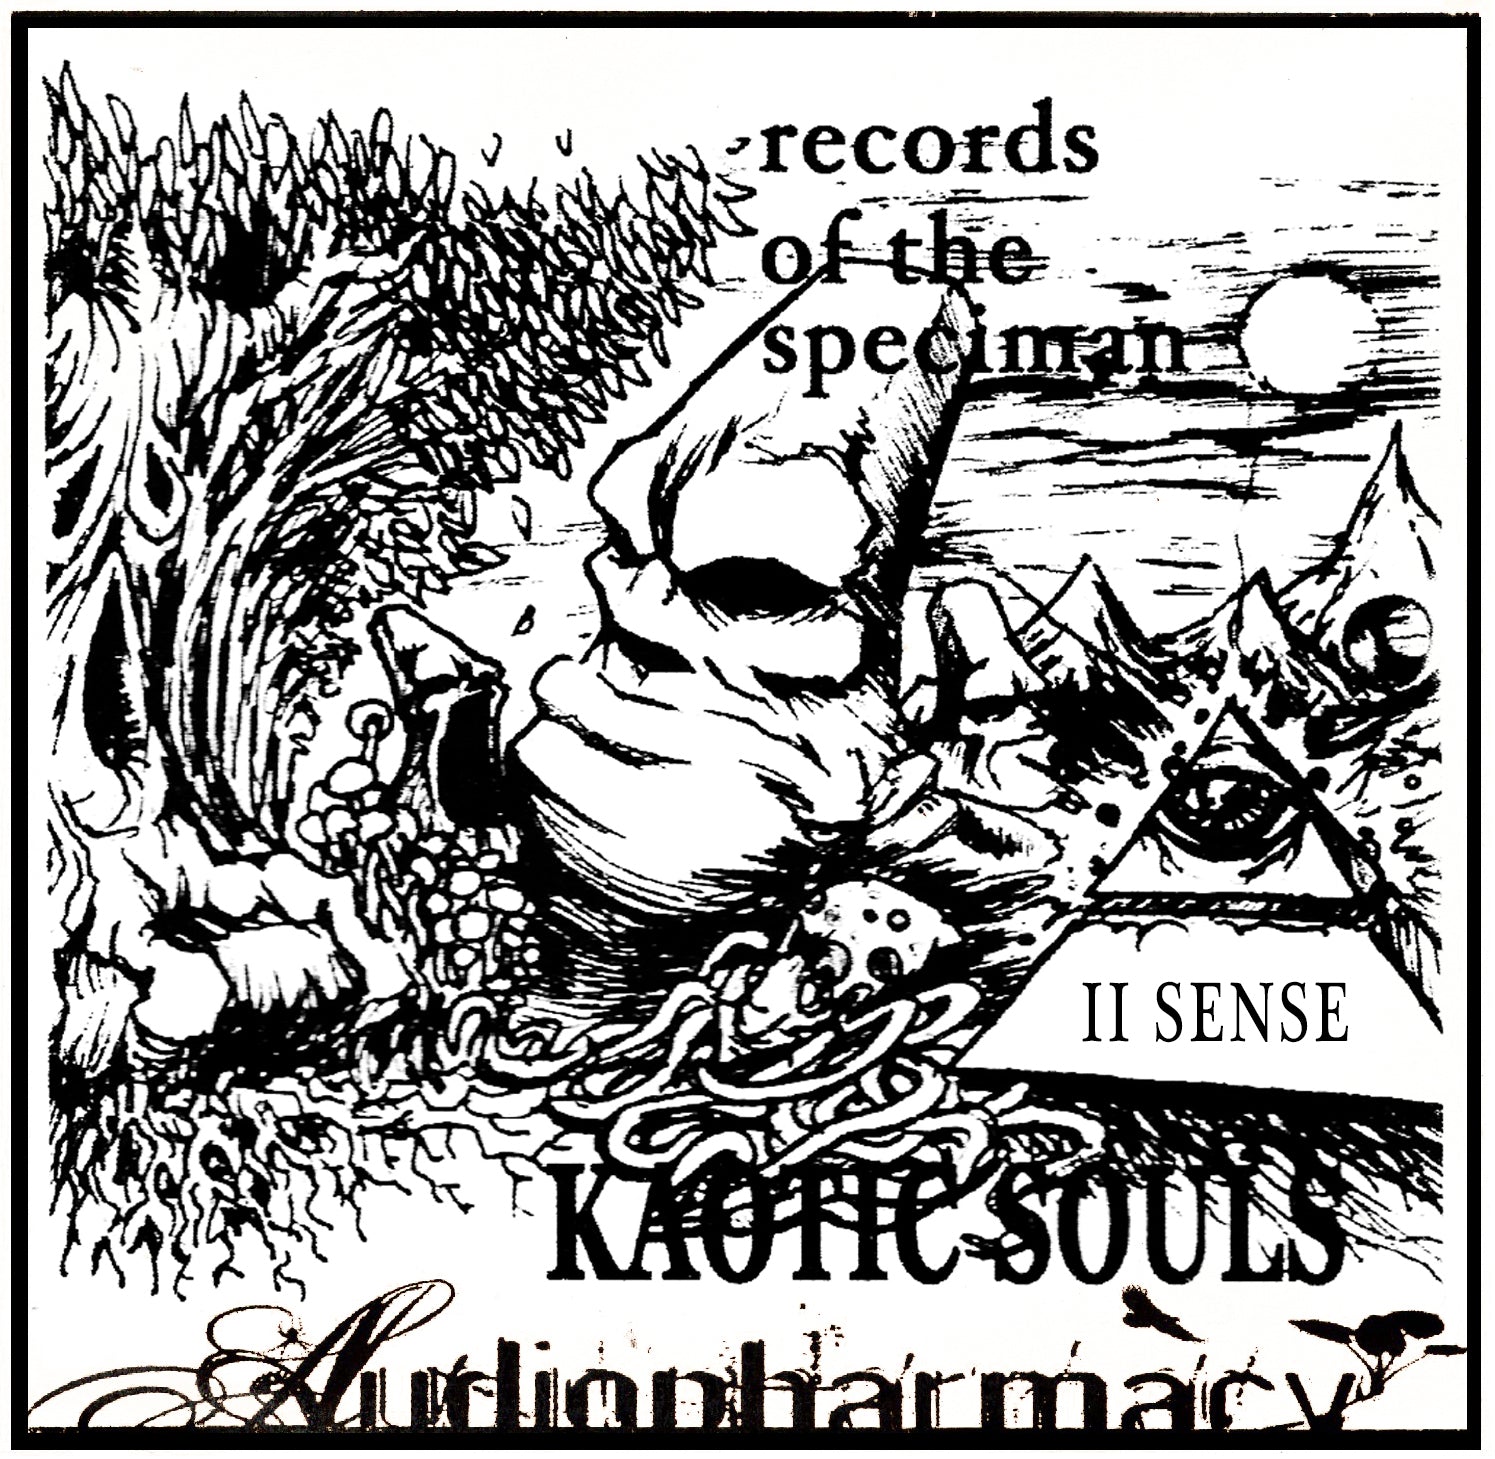 II Sense (Cd) - Records of the Speciman (1997-99)